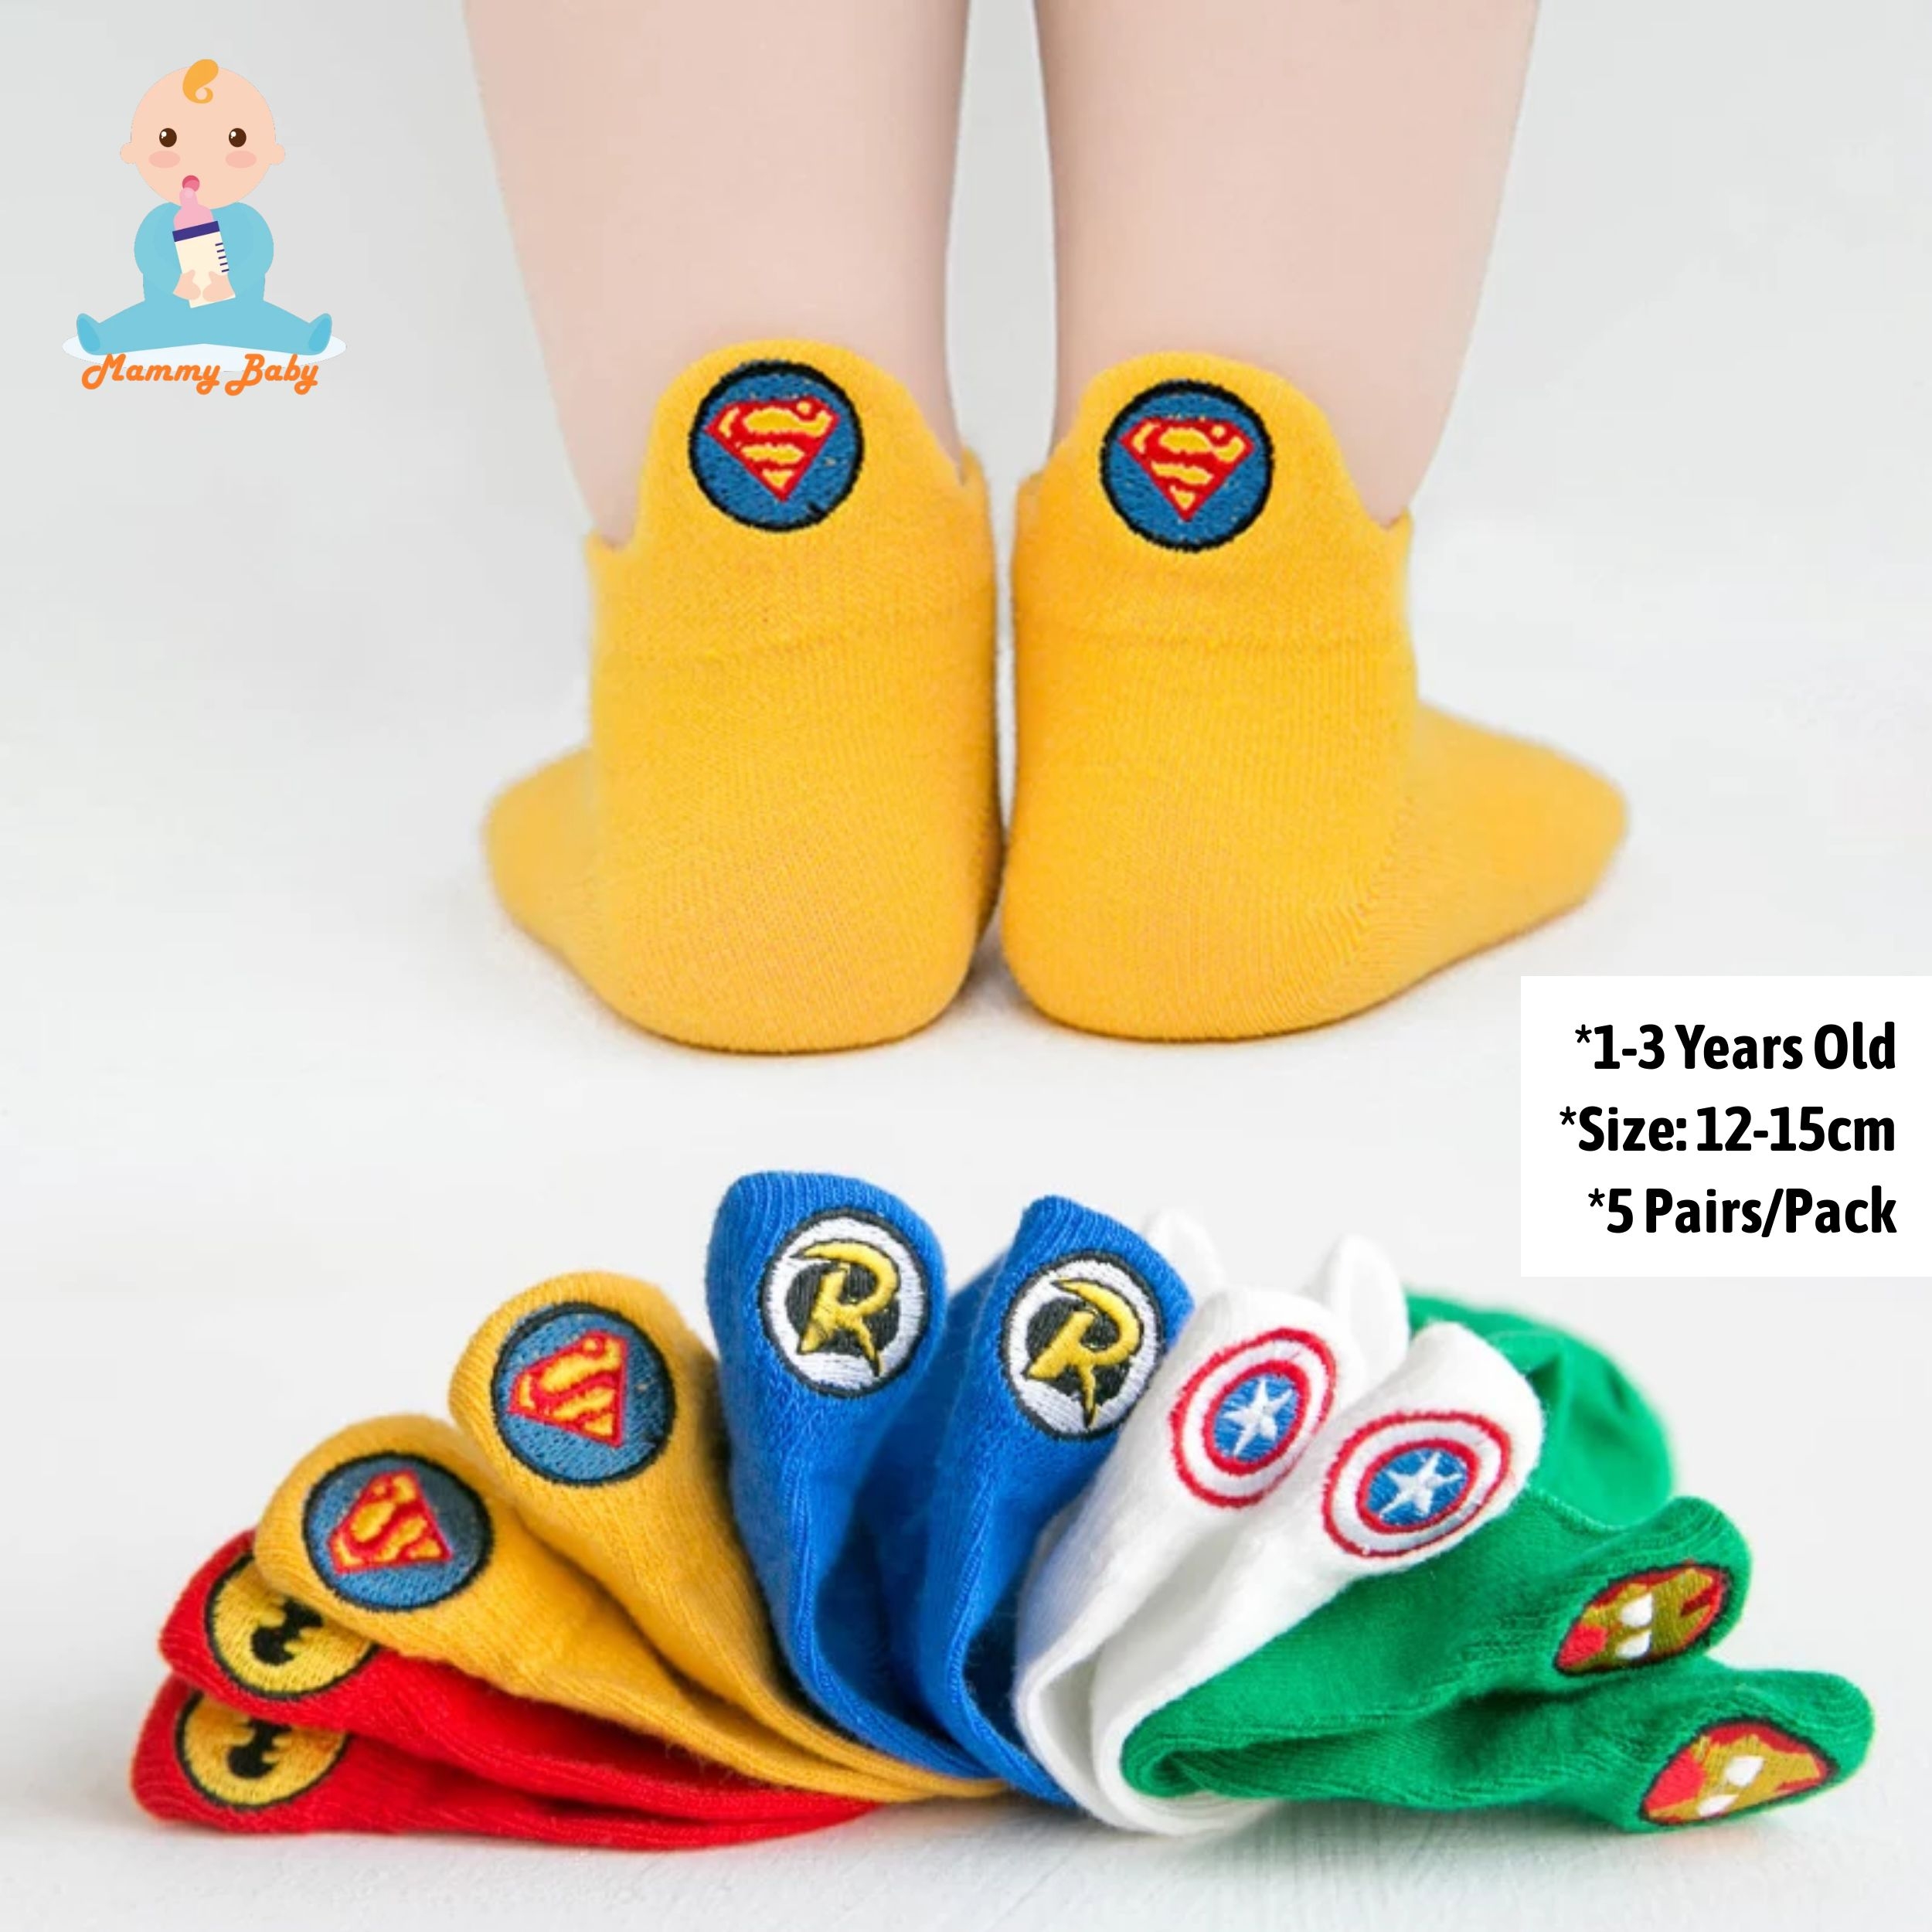 MAMMY BABY Boys & Girls Fashion Design Size-S (1-3ขวบ) ความยาว  S12-15cm ถุงเท้าเด็ก ถุงเท้าแฟชั่นถุงเท้า style เกาหลี 1เซต5คู่5สี (5 pair/pack )ระบายอากาศได้ดี ใส่สบาย